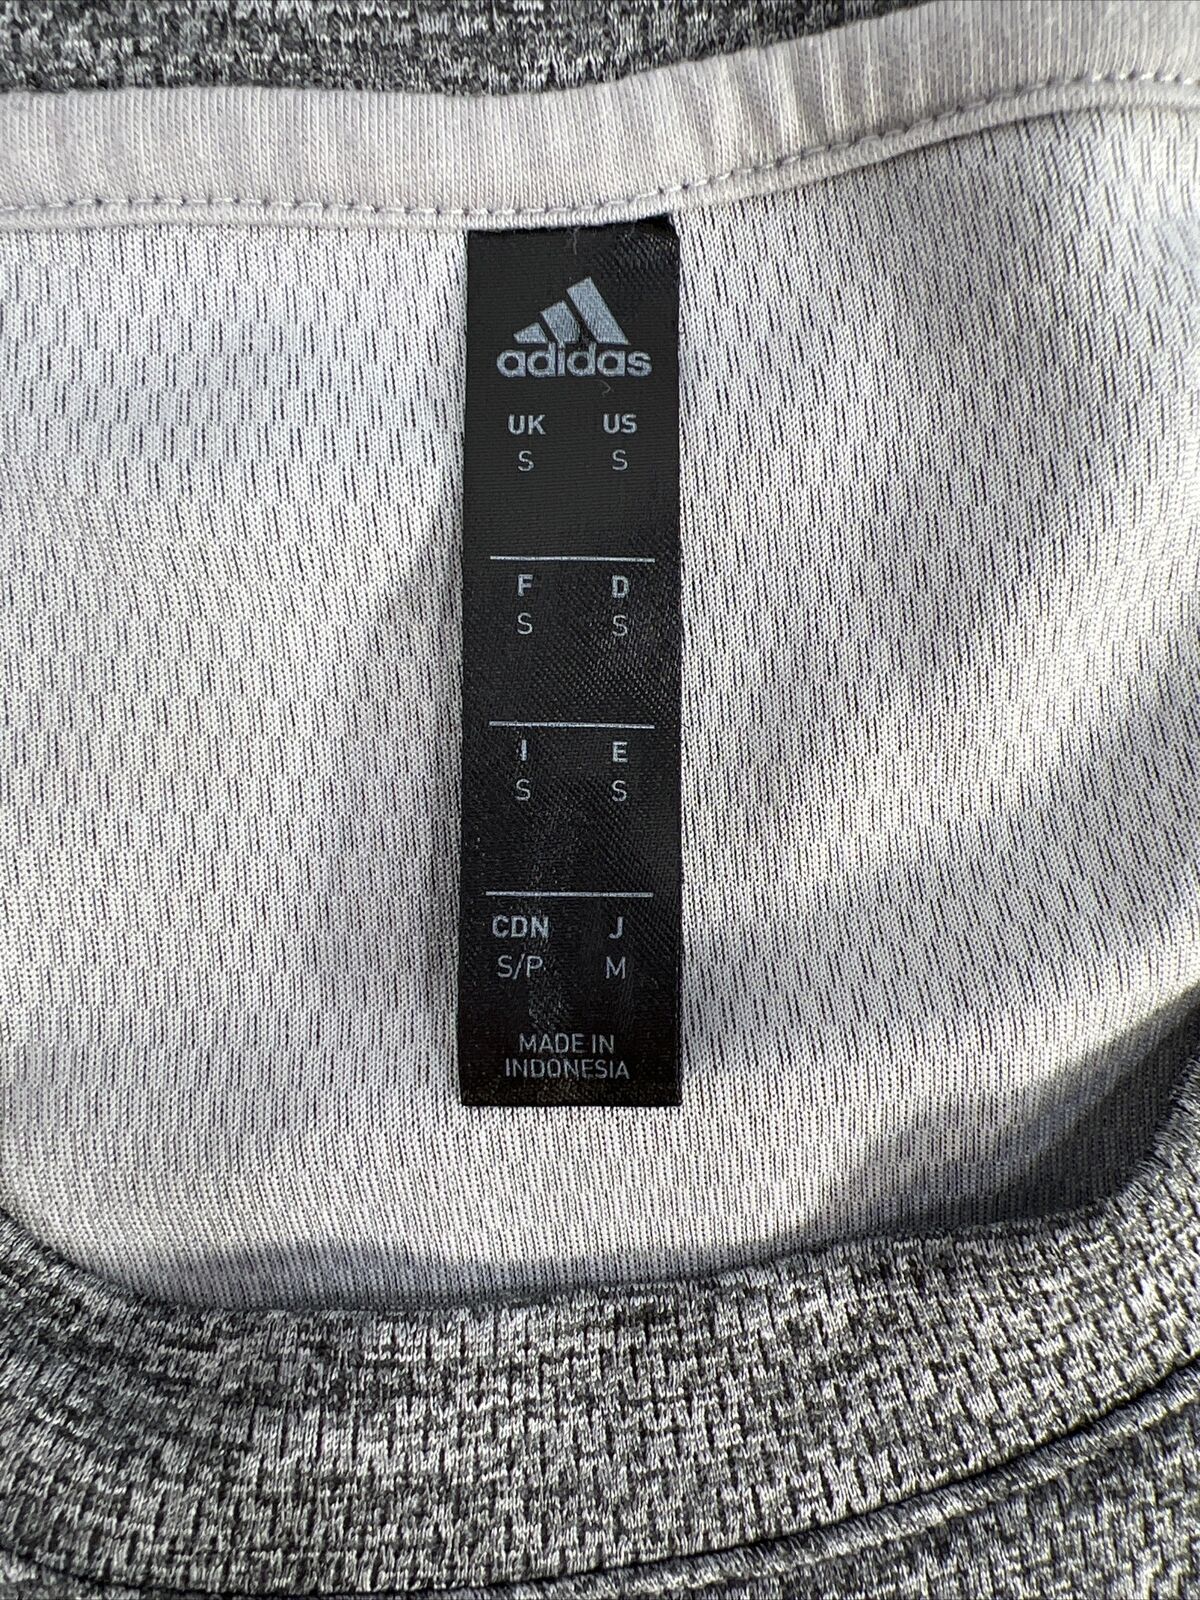 Camiseta deportiva de manga corta gris jaspeada adidas para hombre - S